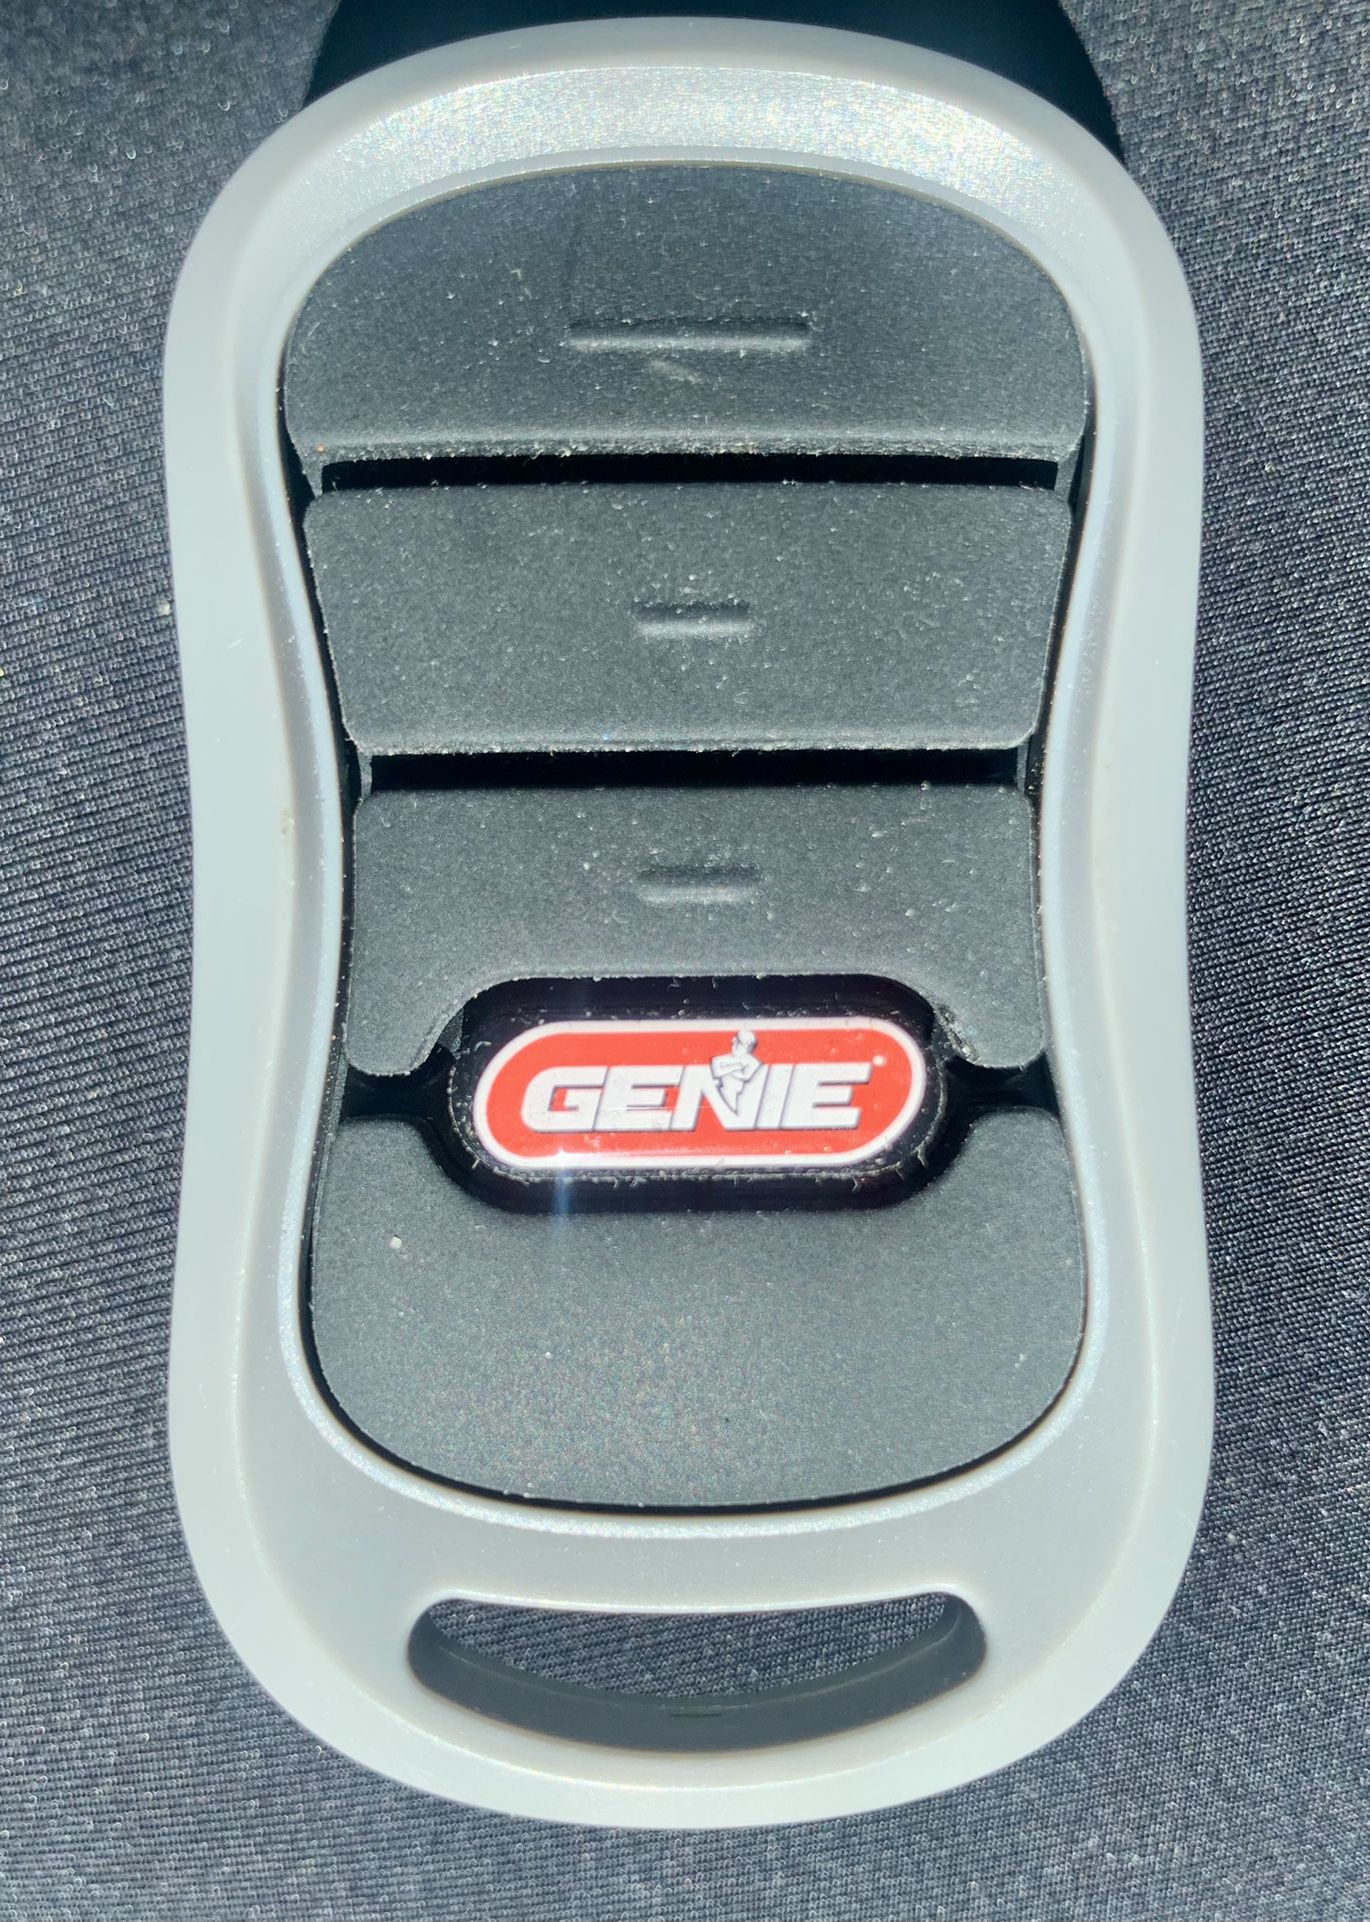 Genie Garage Door Replacement Remote 